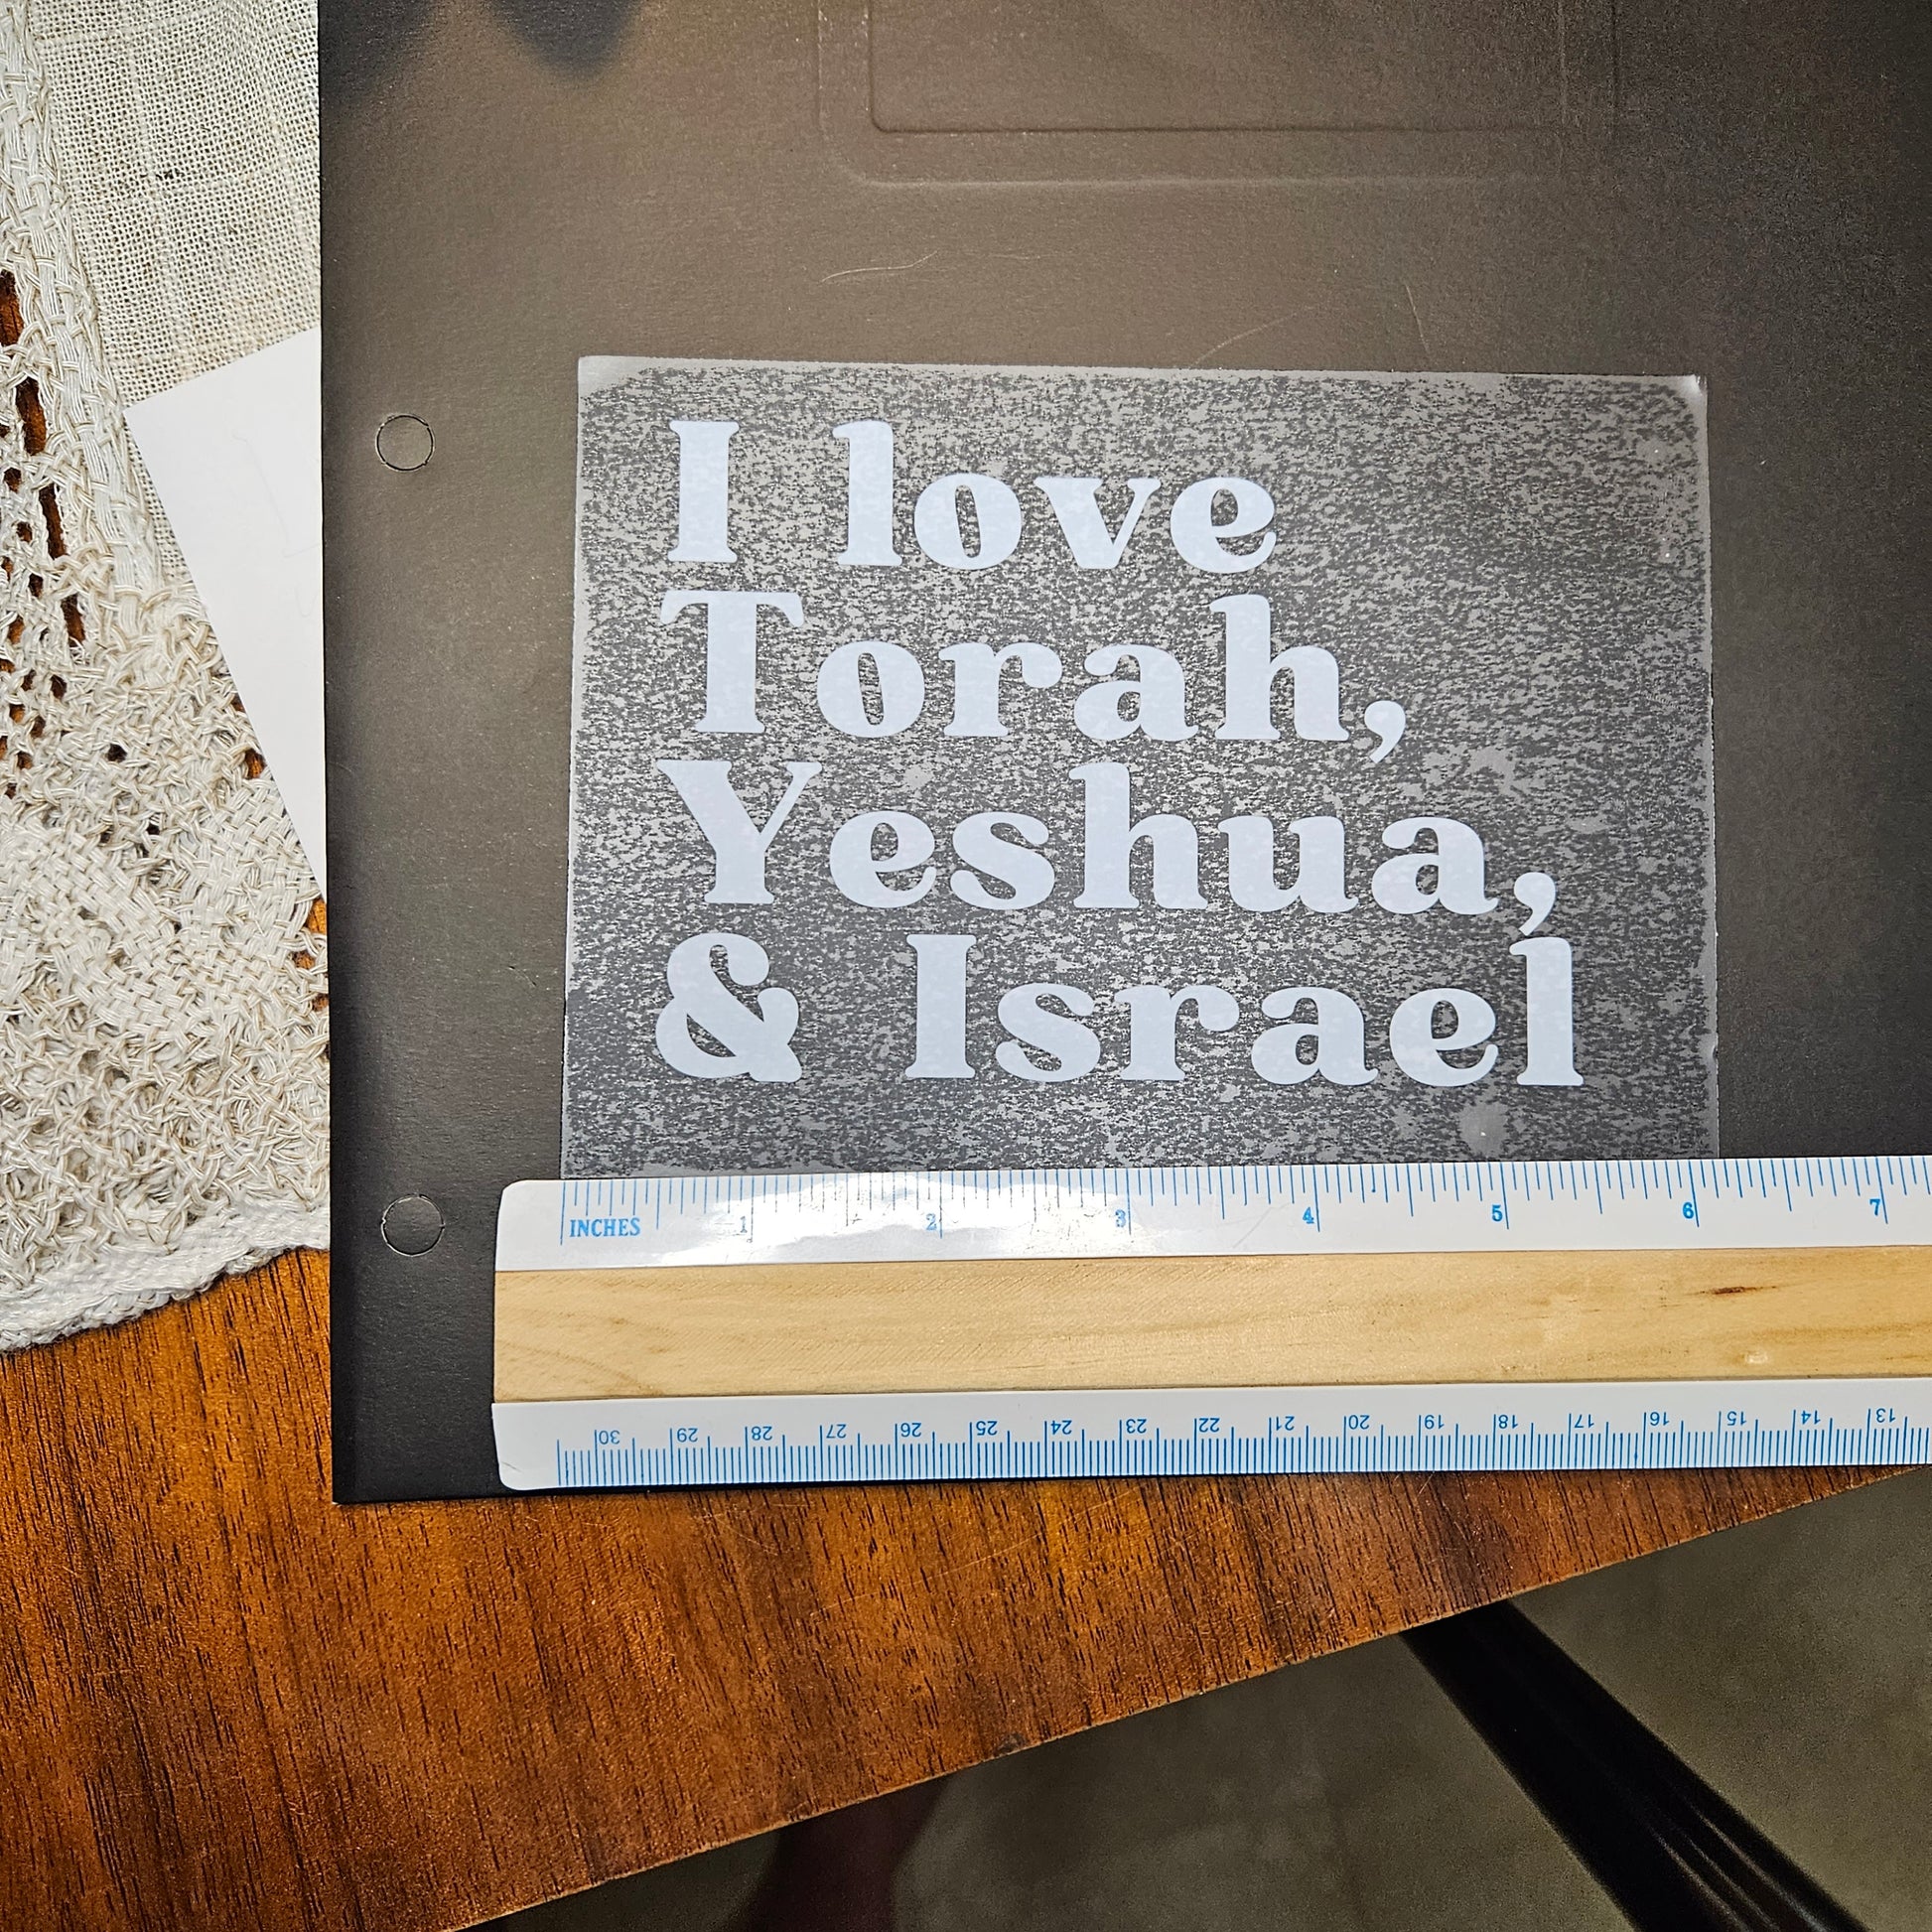 Torah Sisters Magazine Subscription